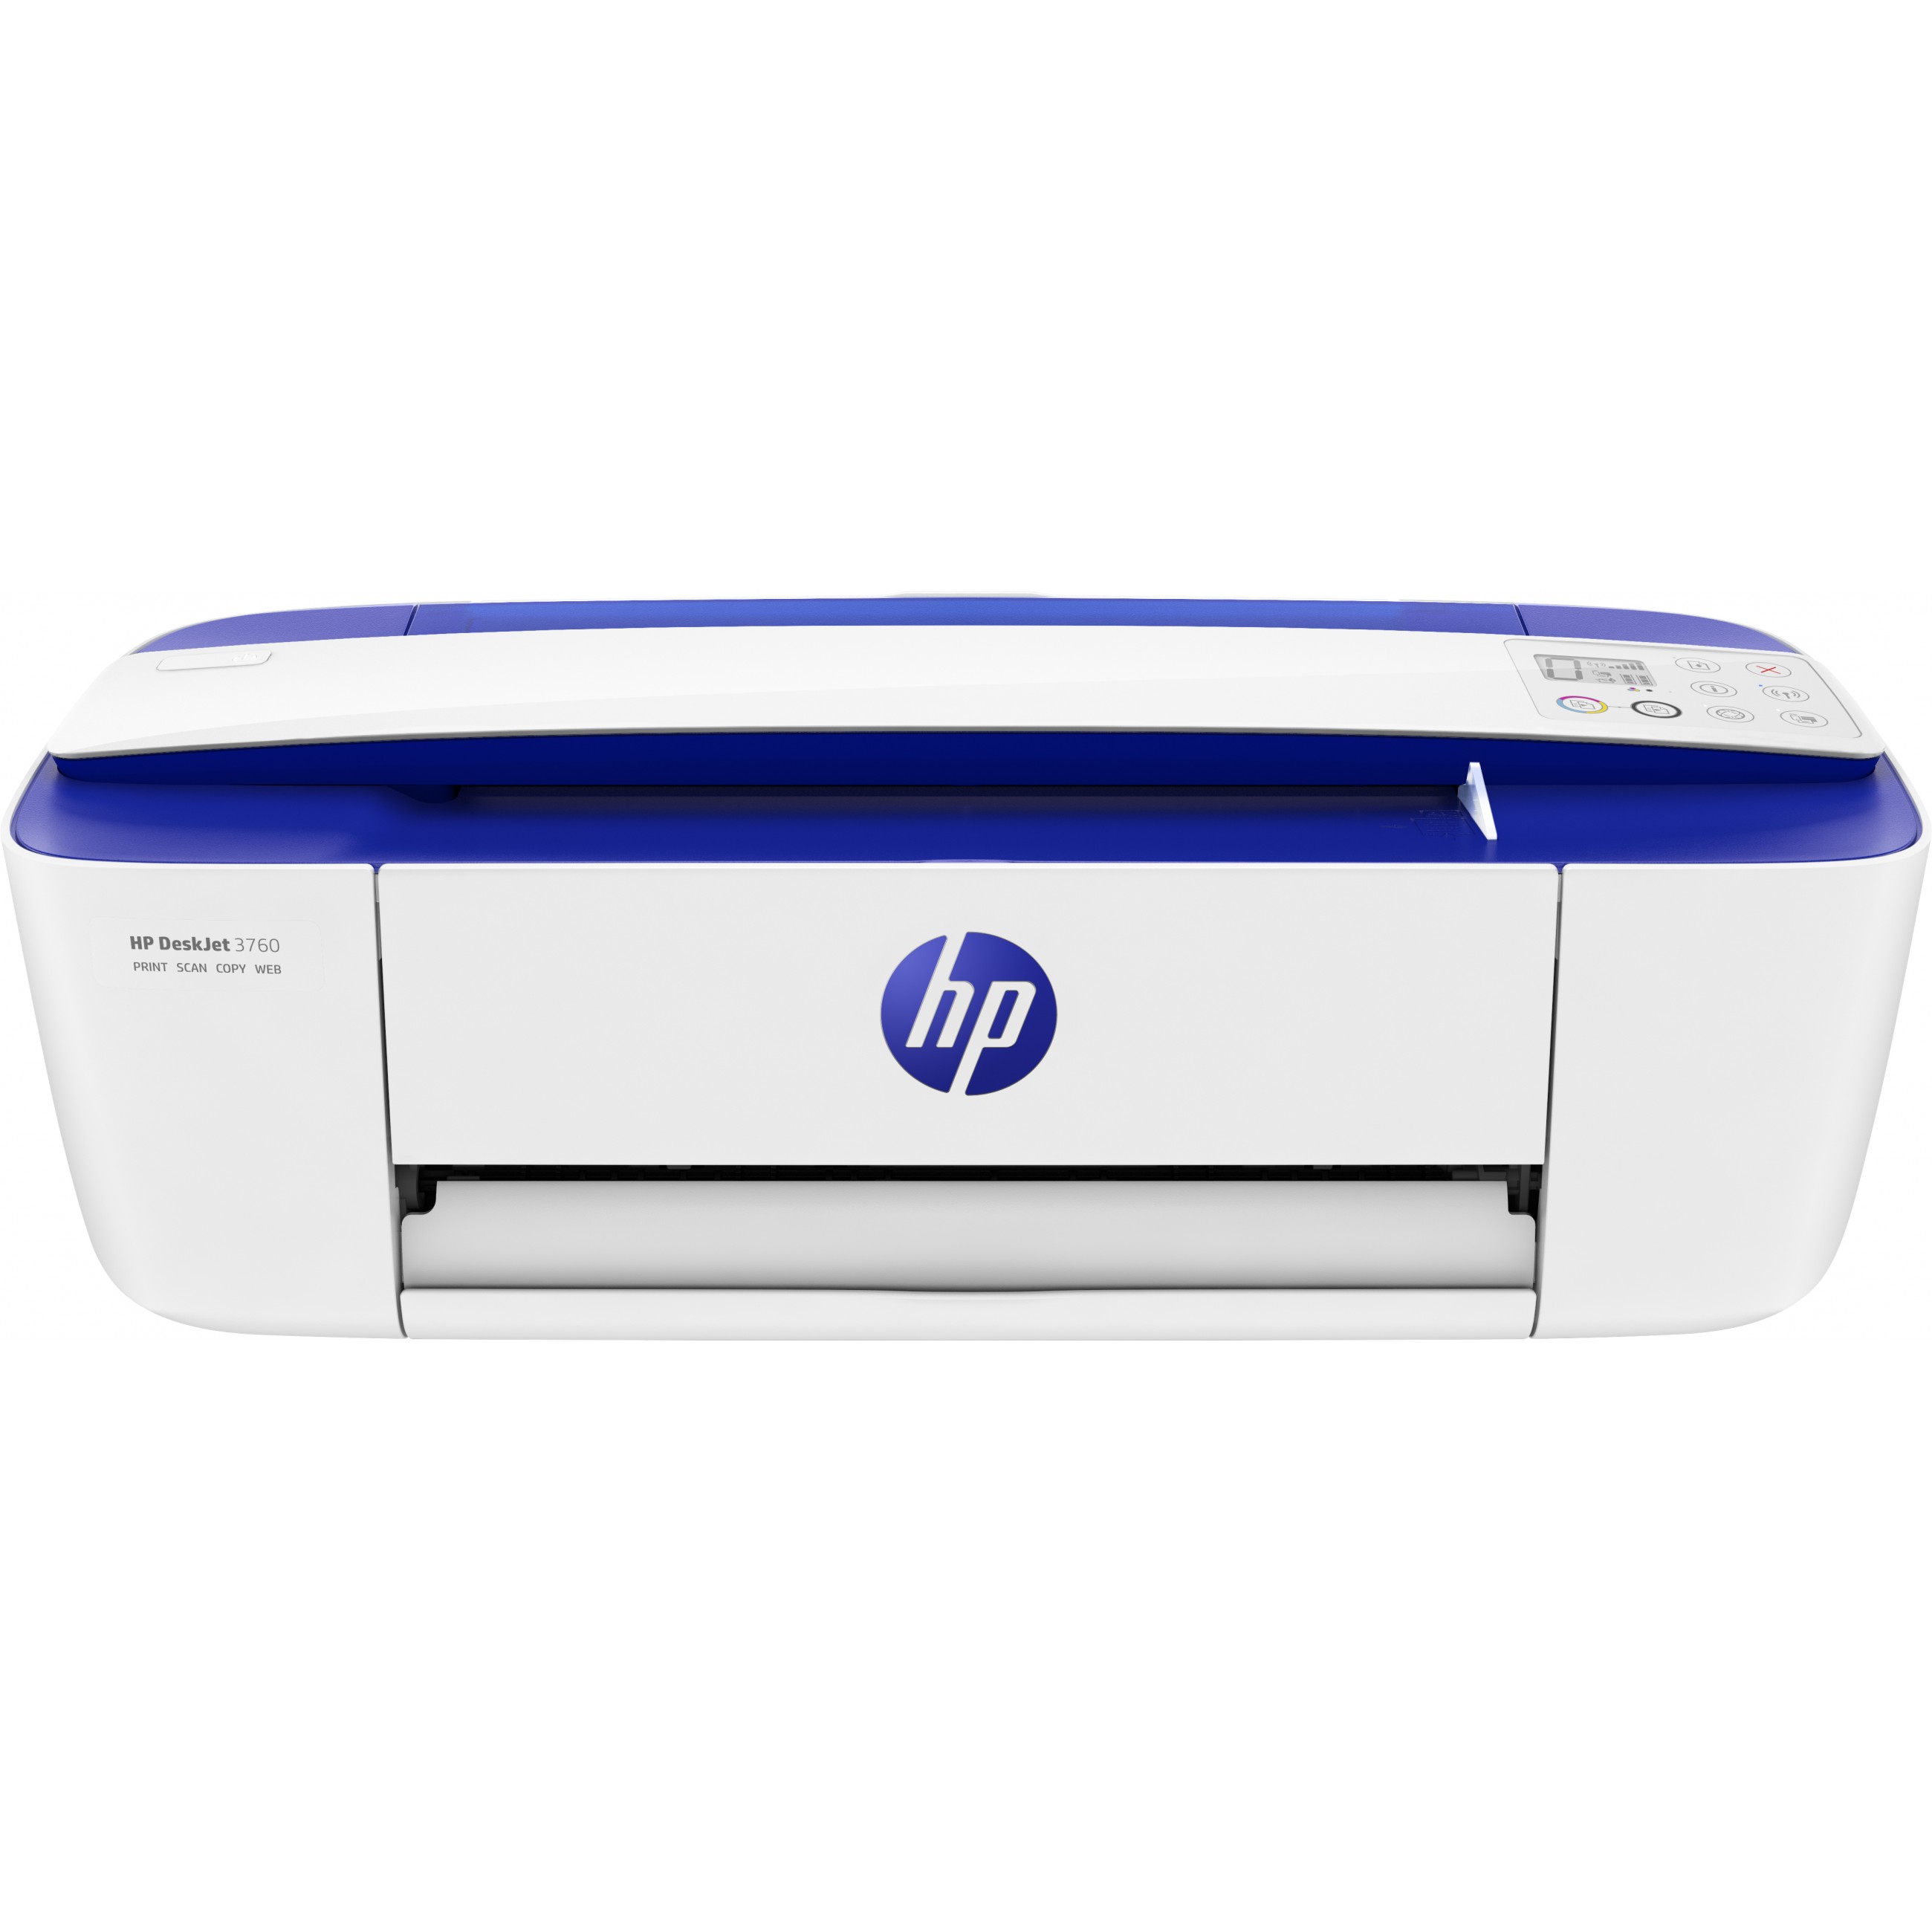 T HP DeskJet 3760 Tintenstrahldrucker 3in1/A4/WiFi/ePrint